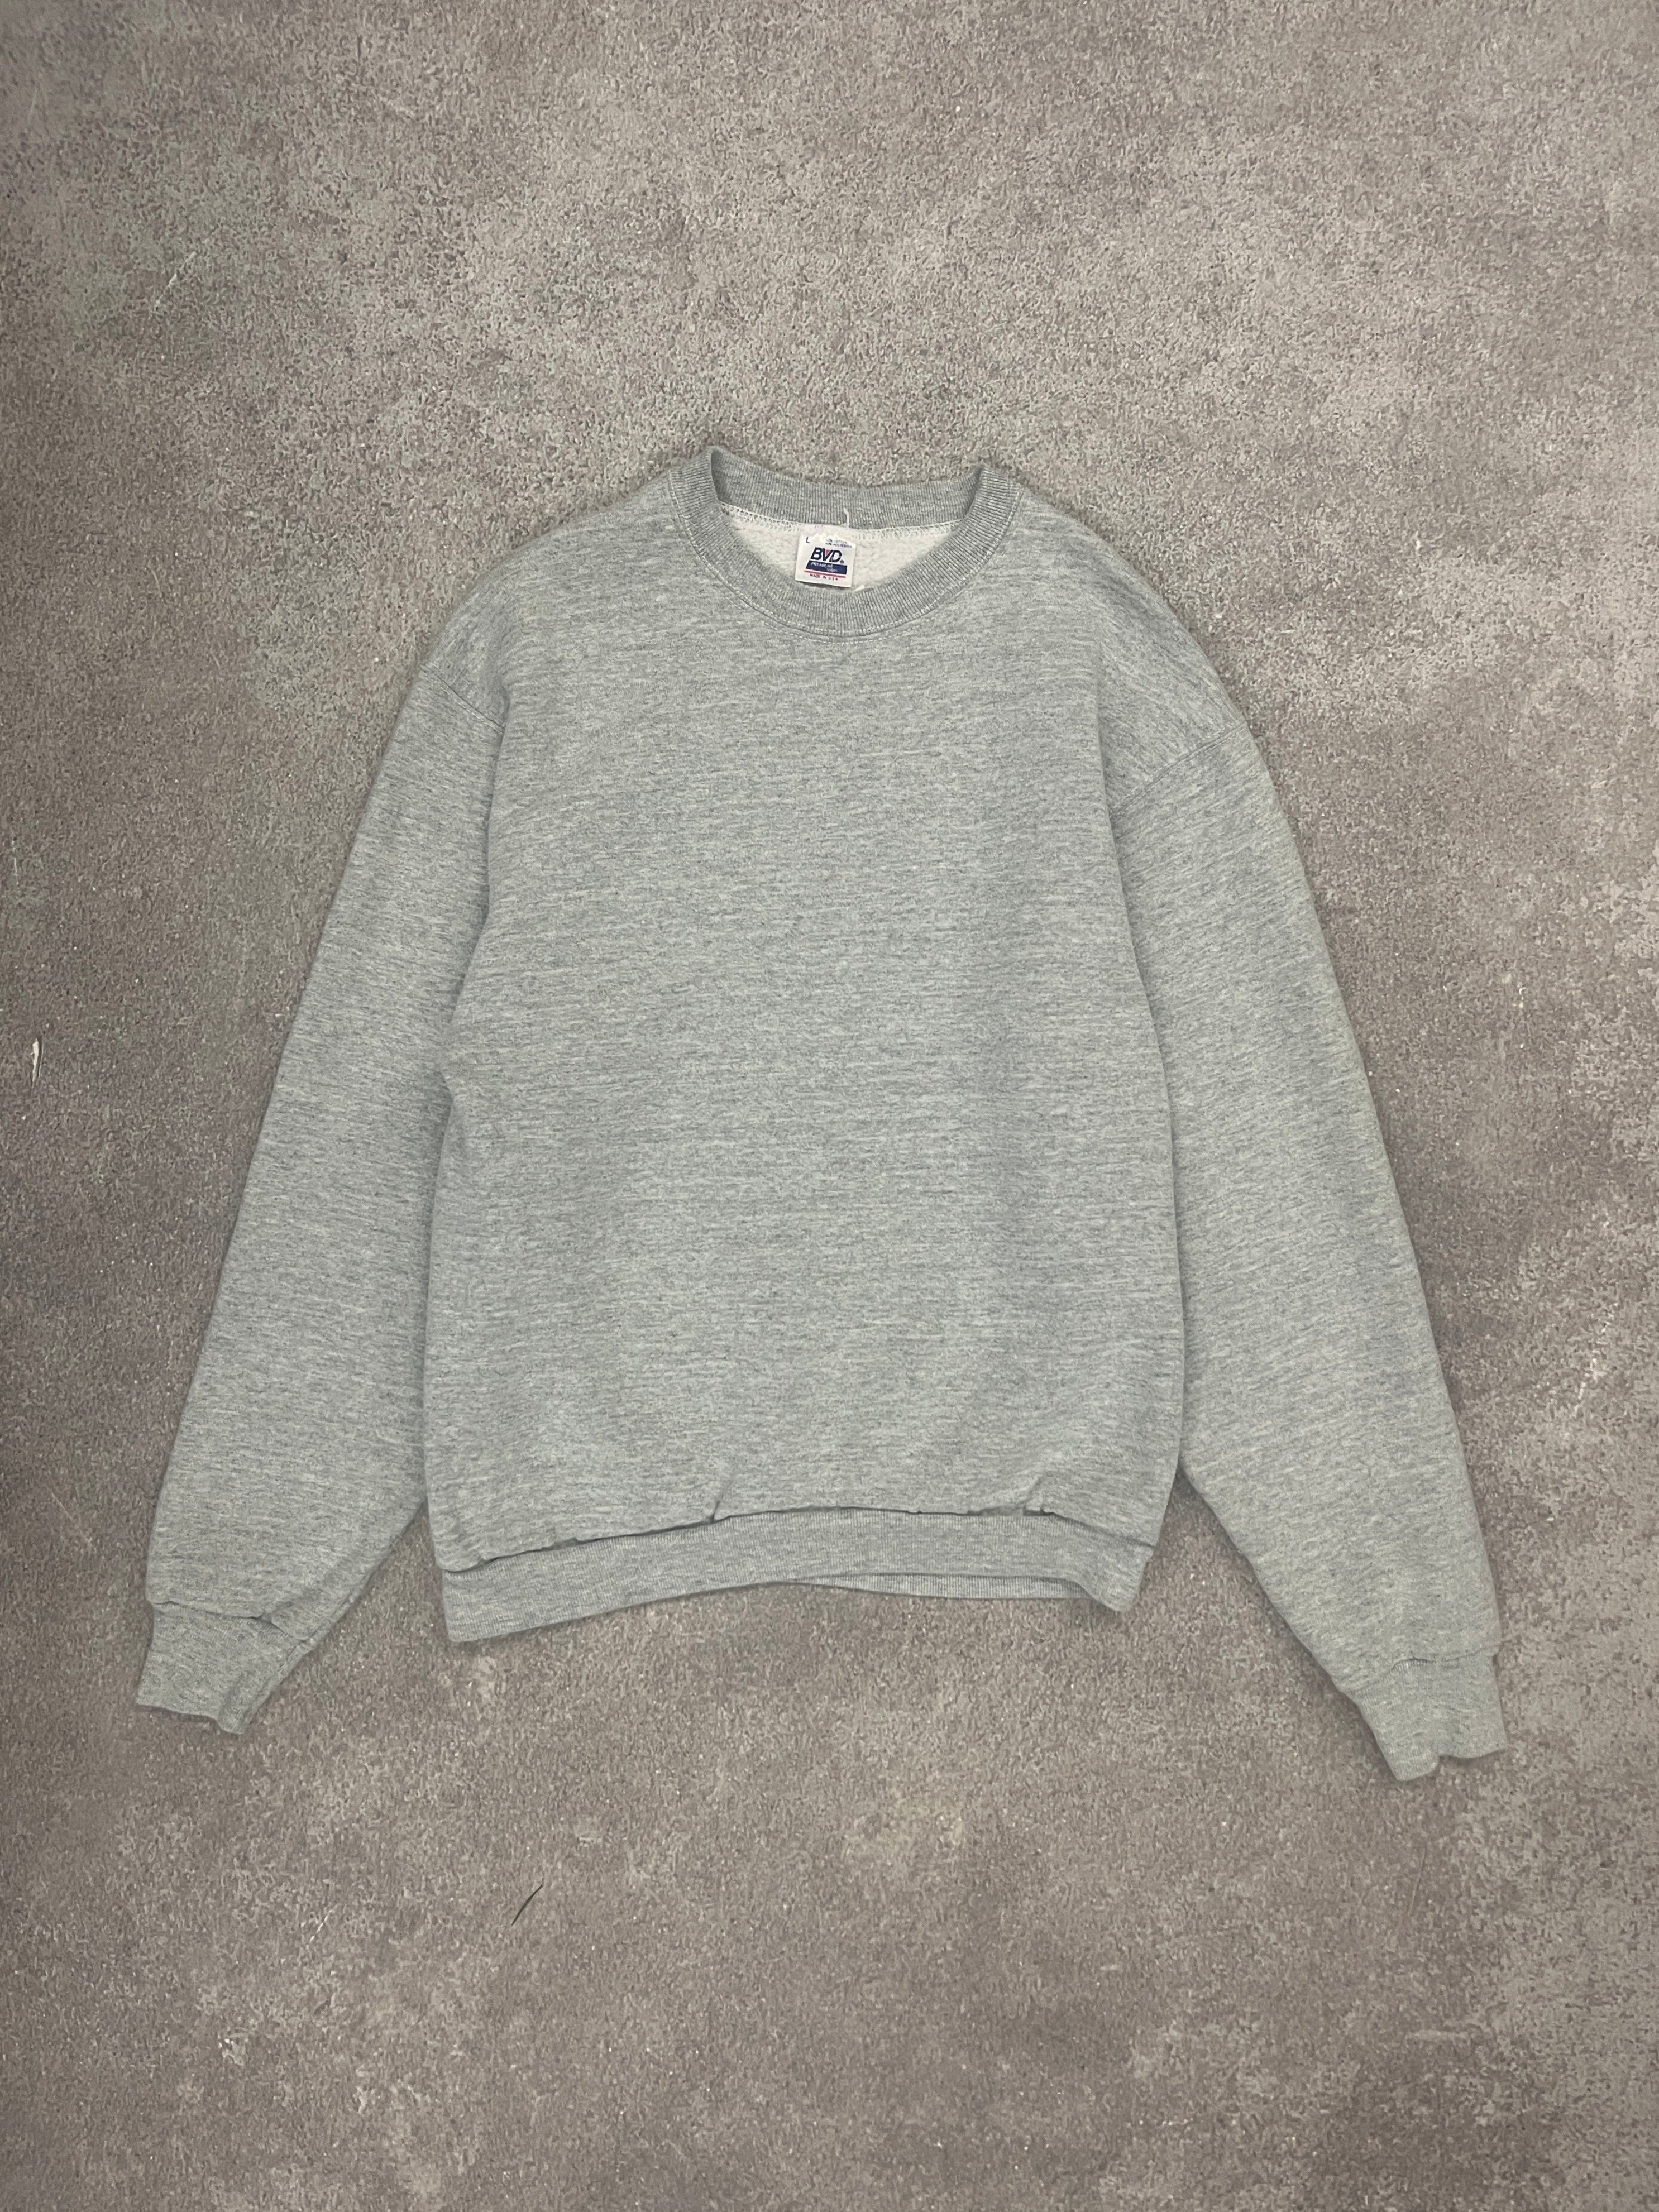 Vintage Blank Sweater Grey // Small - RHAGHOUSE VINTAGE